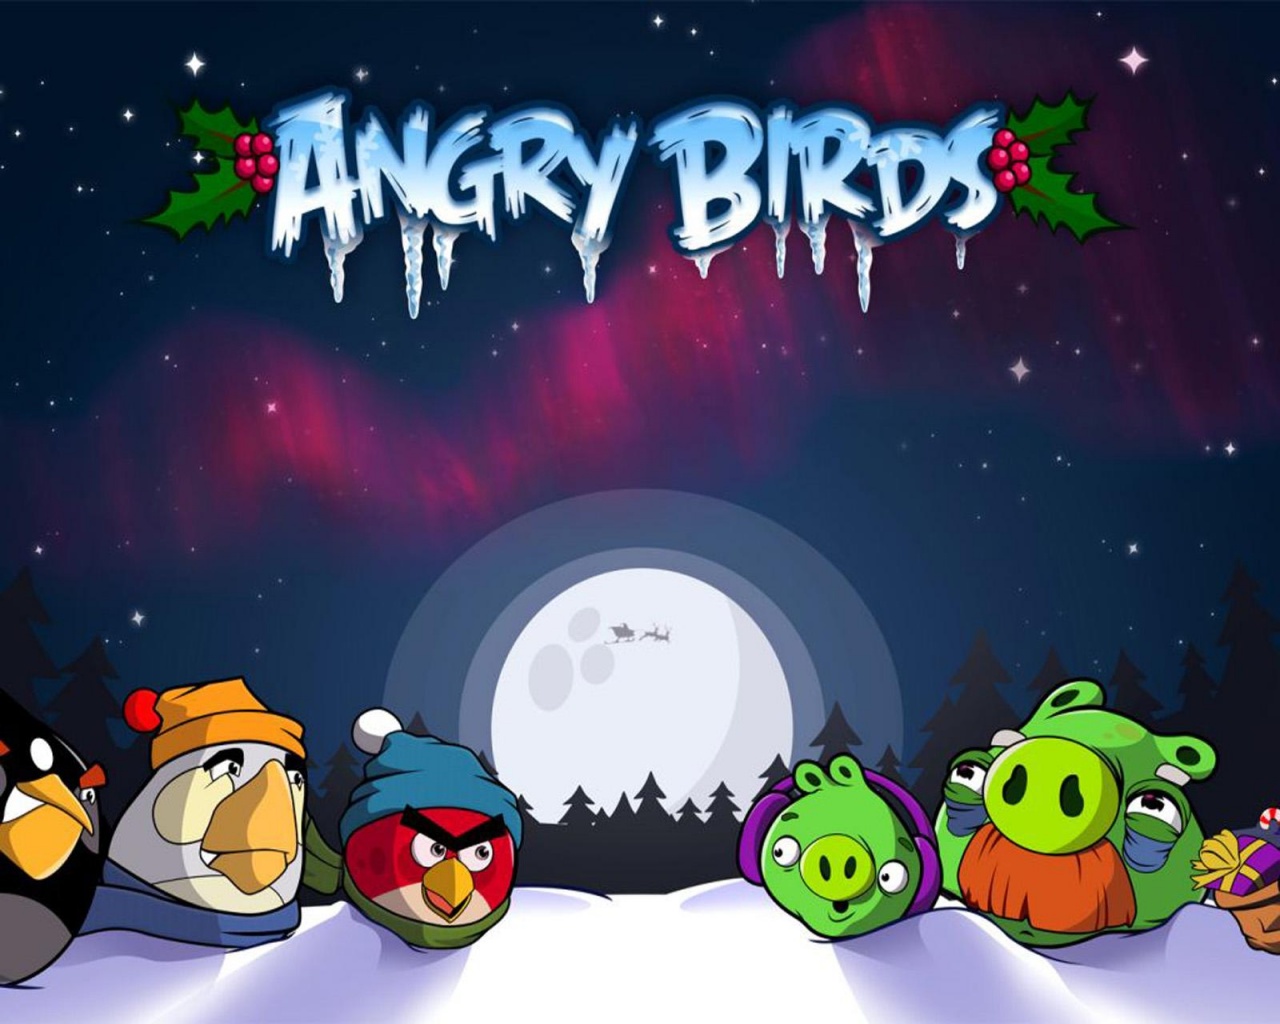 video game, angry birds, angry birds seasons